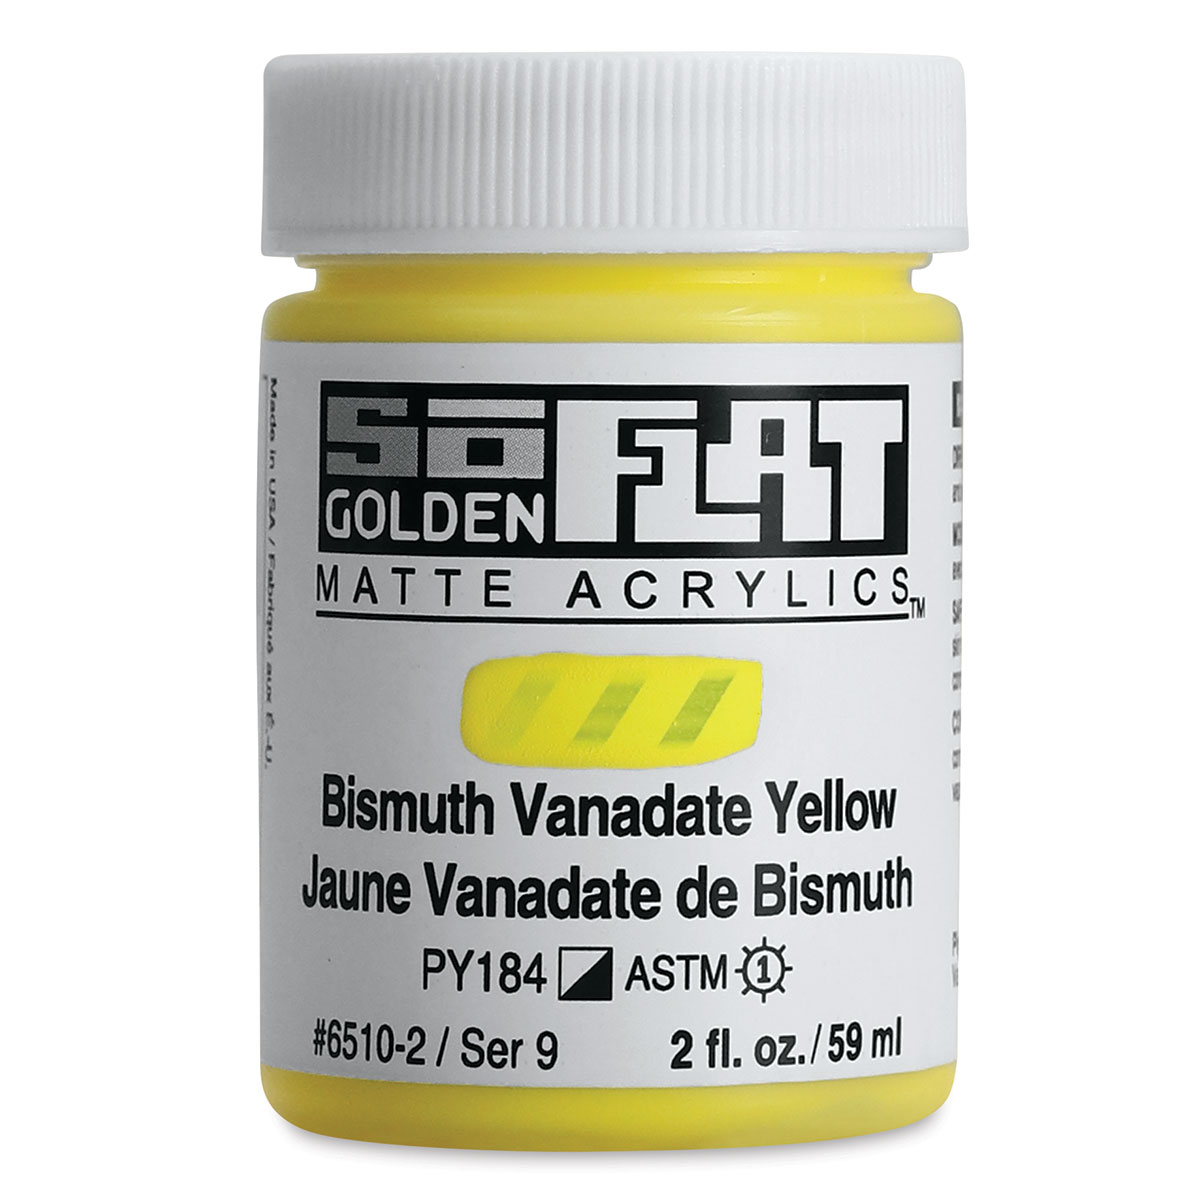 Golden SoFlat Matte Acrylic Paint - Fluorescent Yellow, 59 ml, Jar